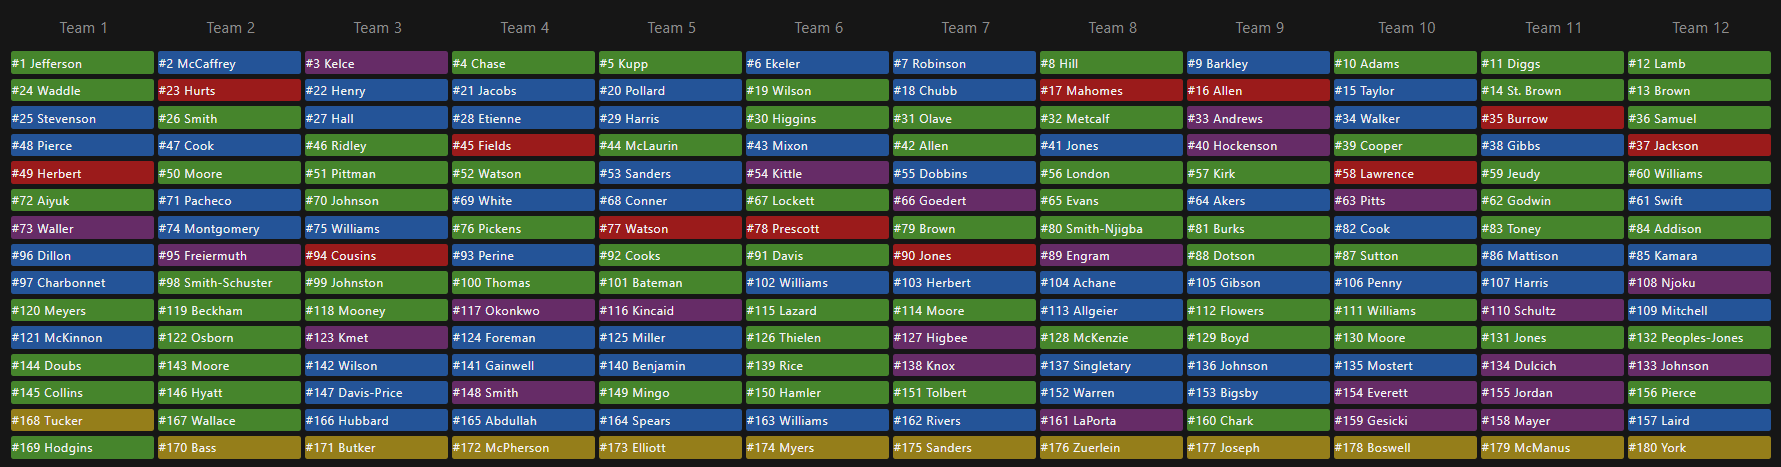 Half-PPR Average Draft Position (ADP) 12-team (2023)